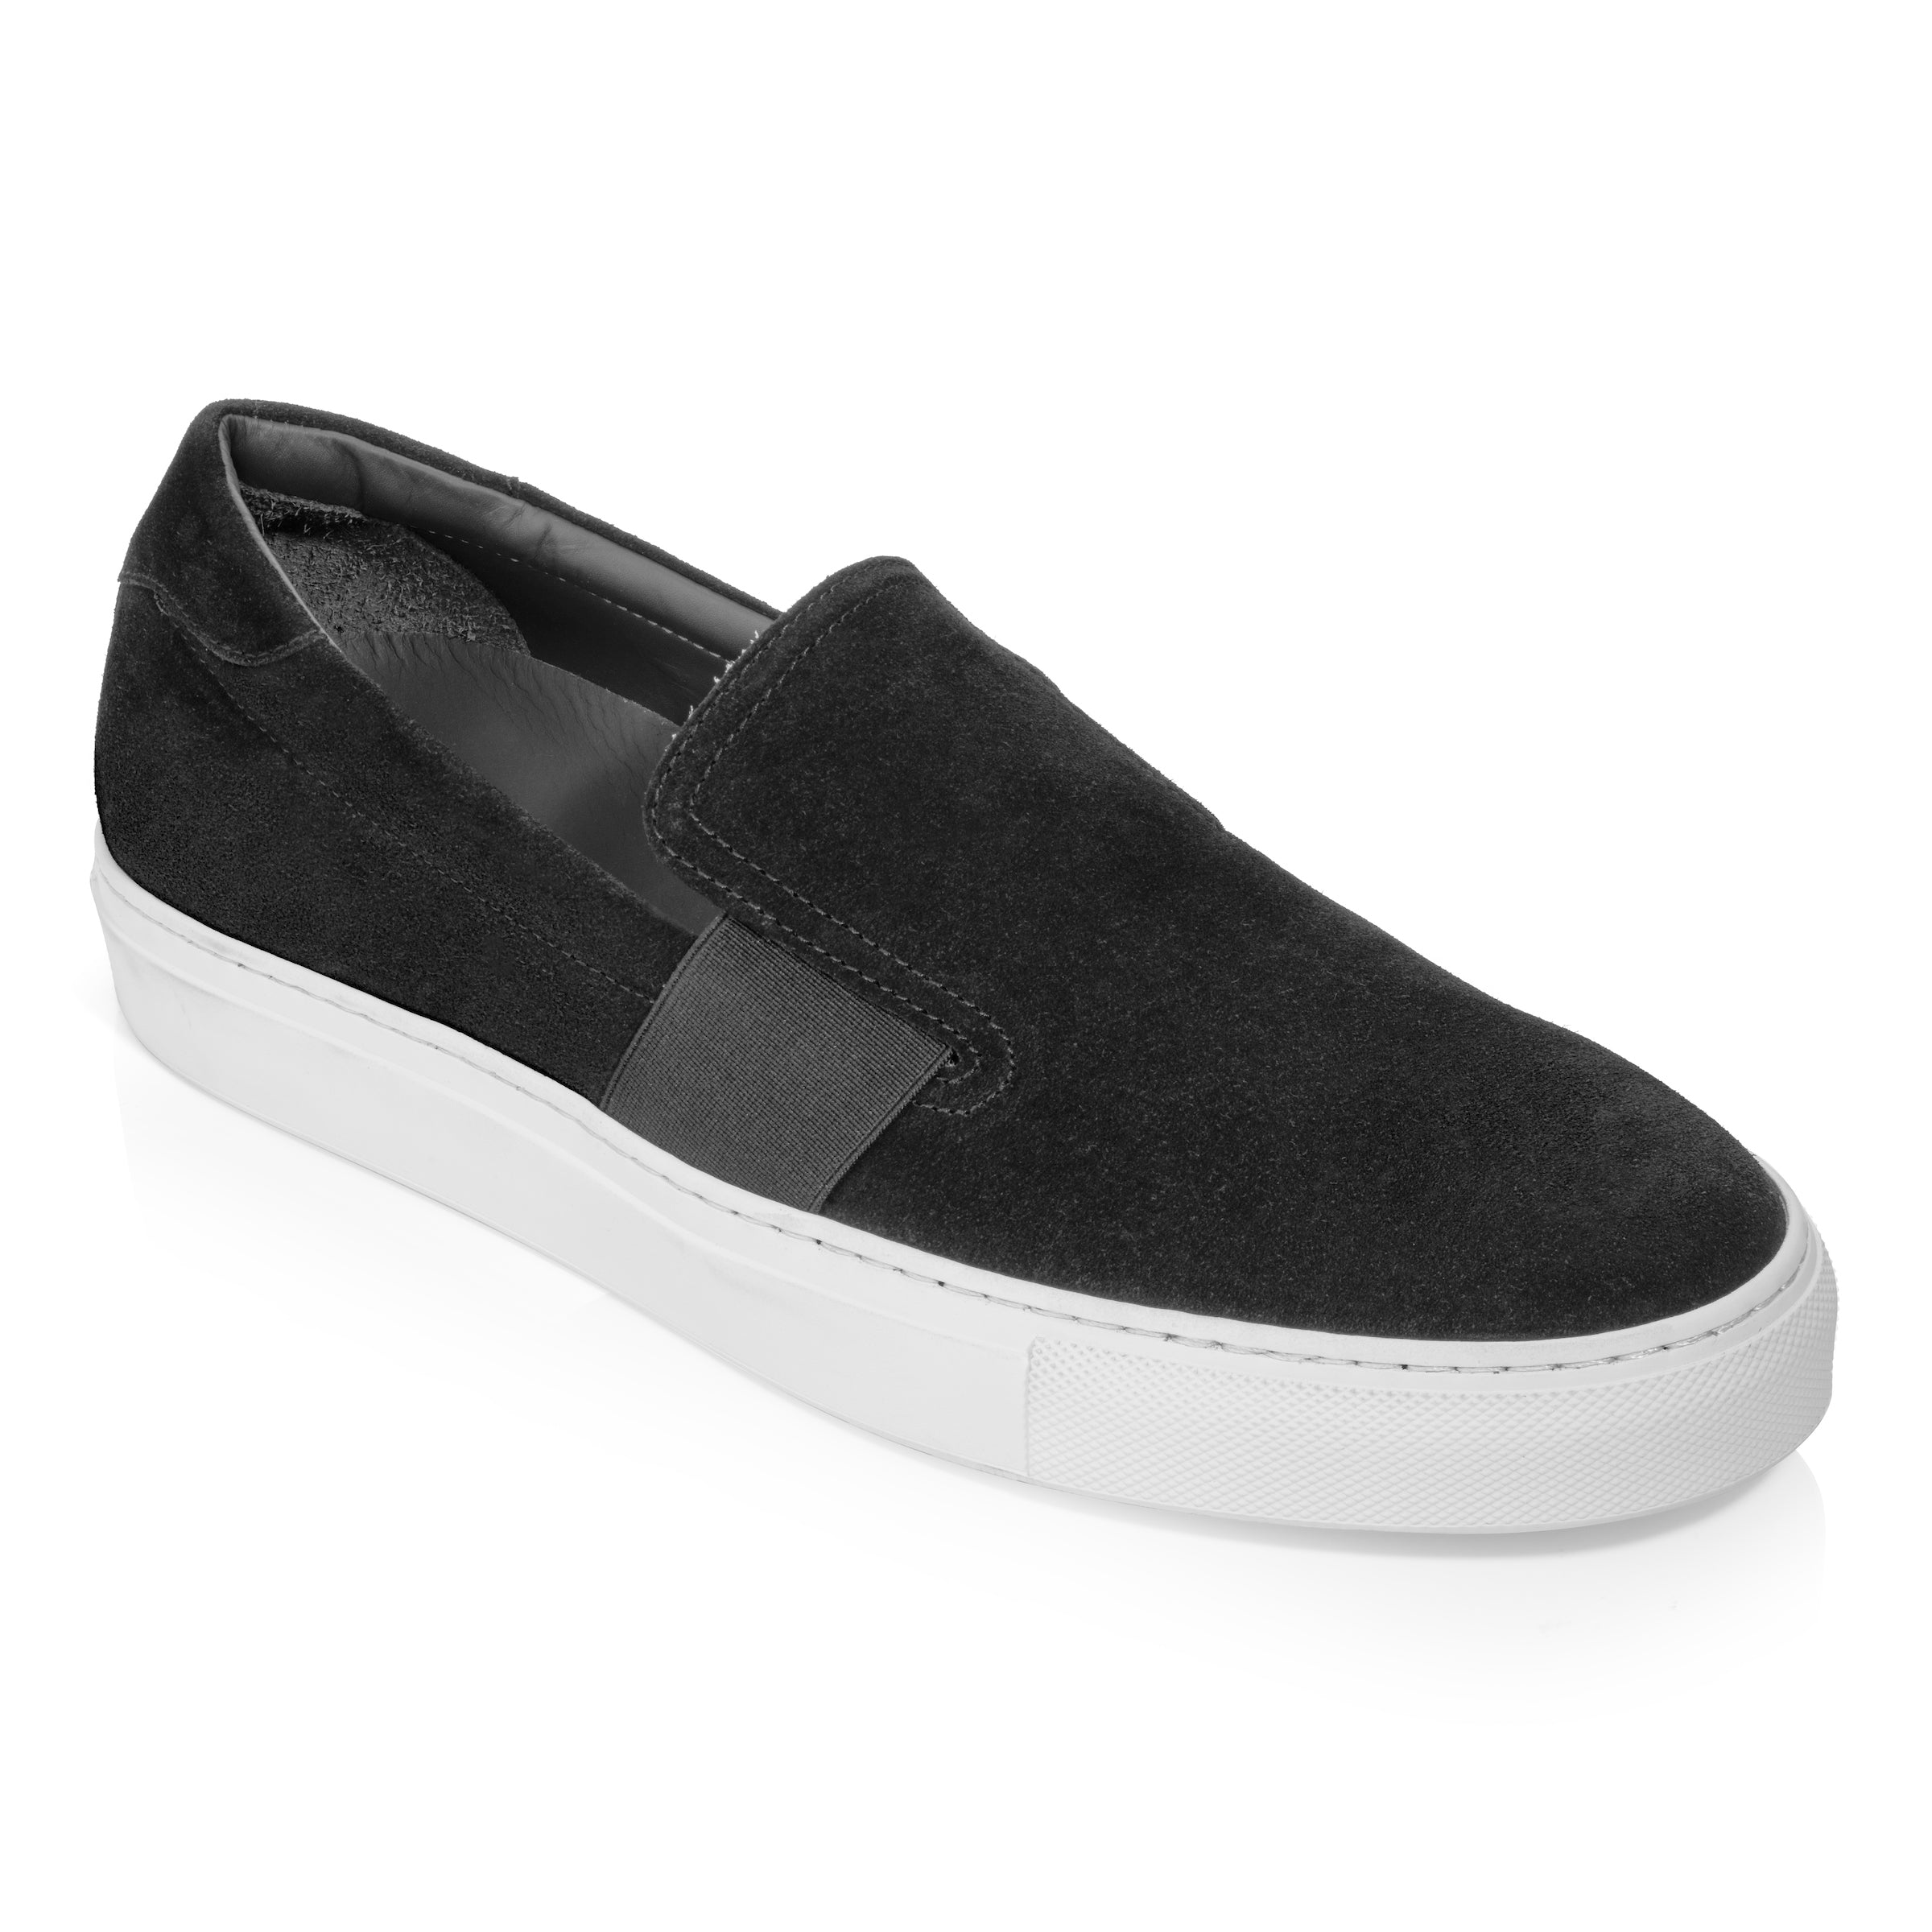 Newcastle Black Suede Slip-On Sneaker